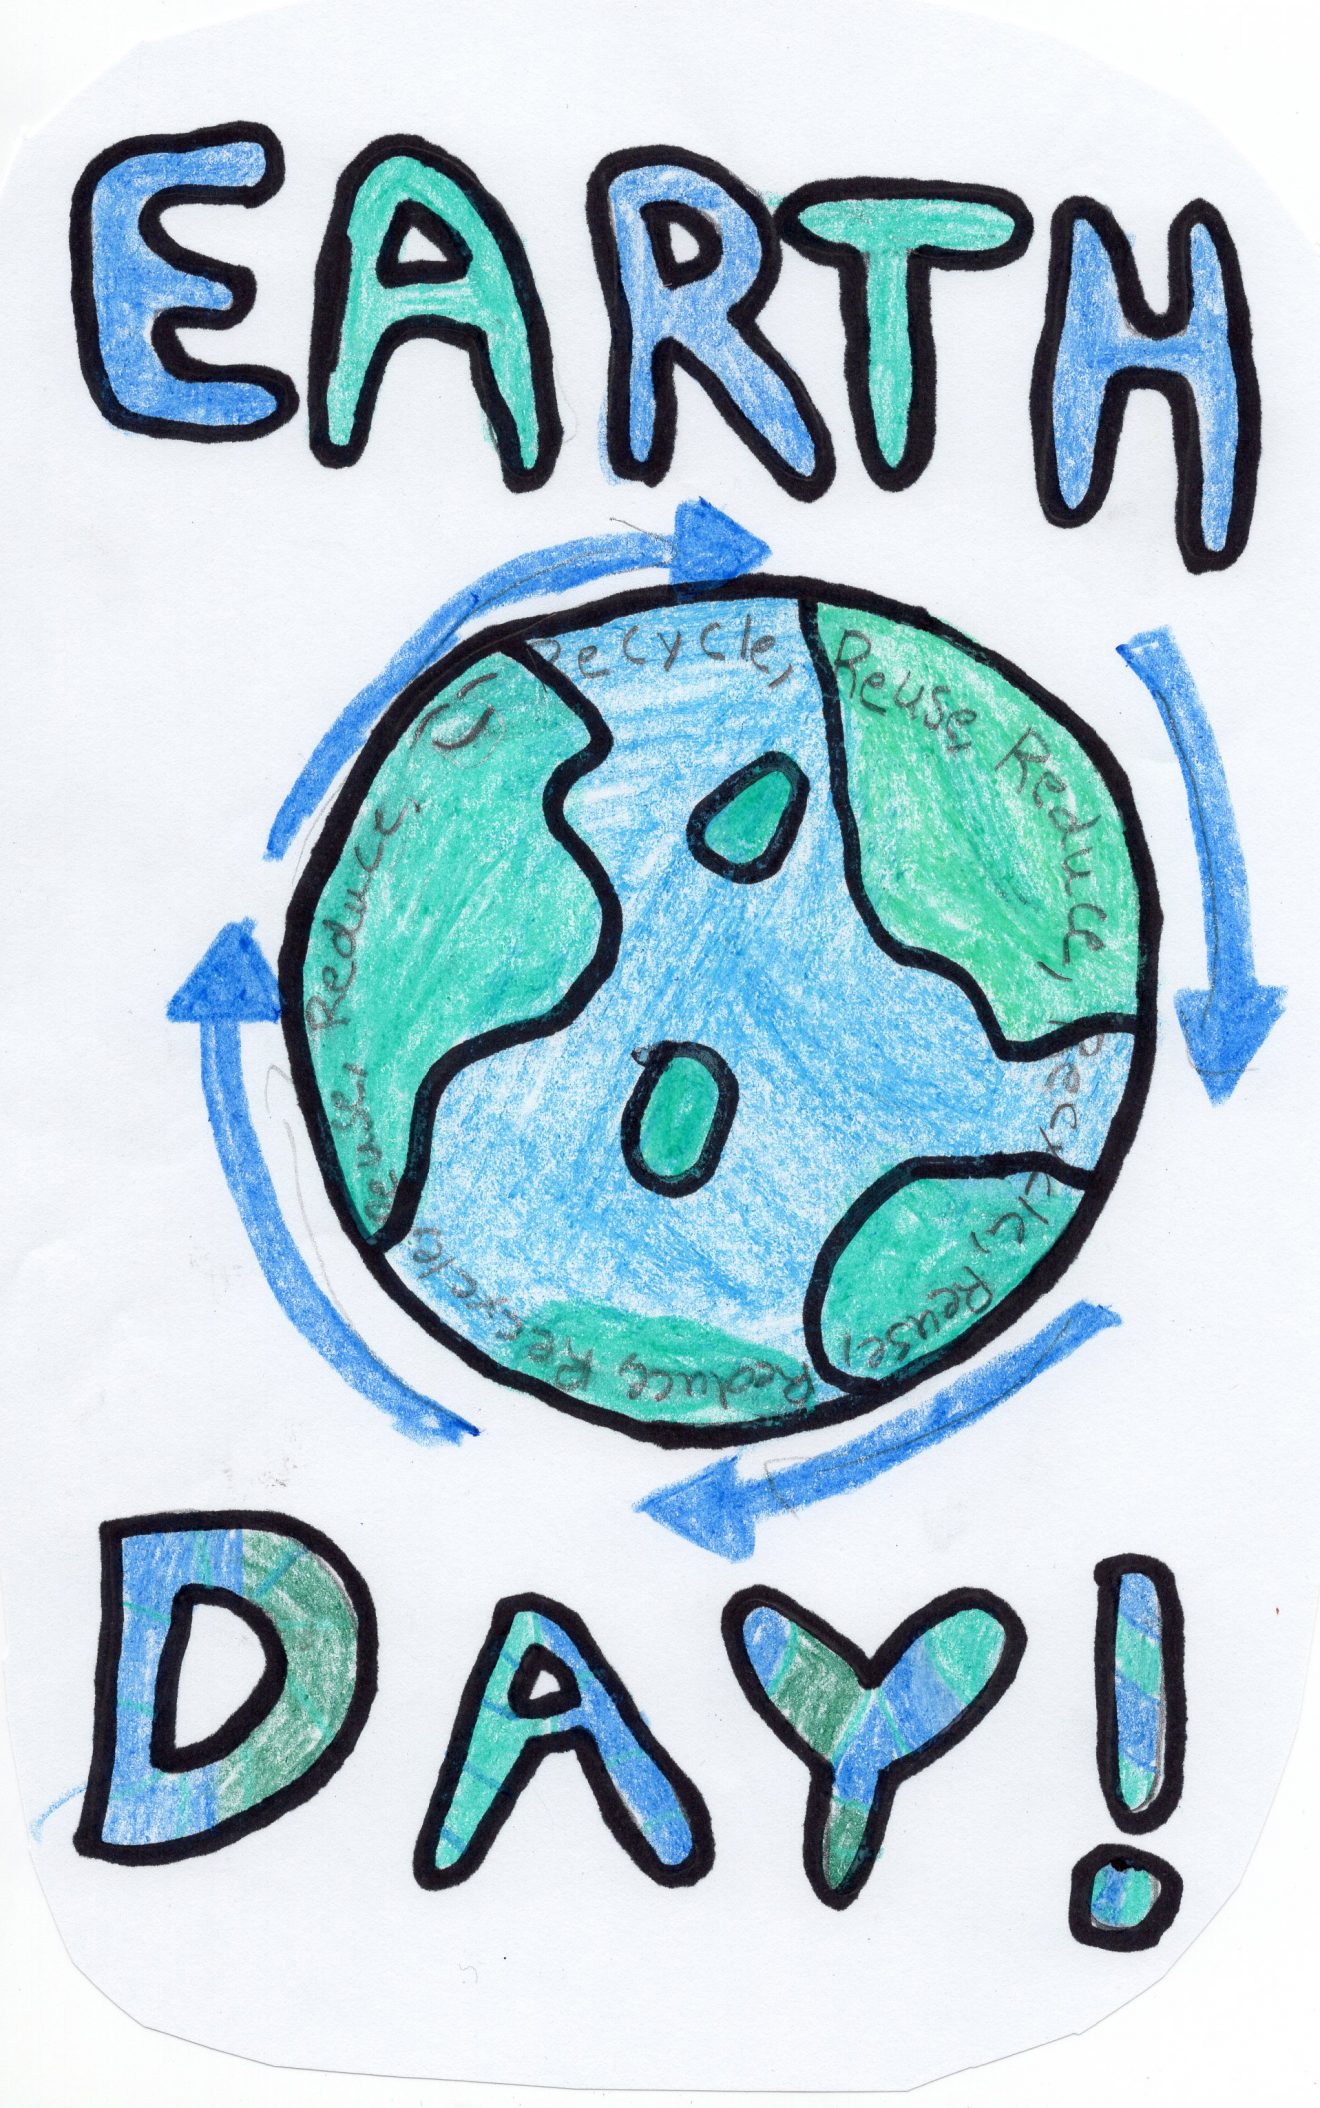 Earth Day Drawings Gazette Journal